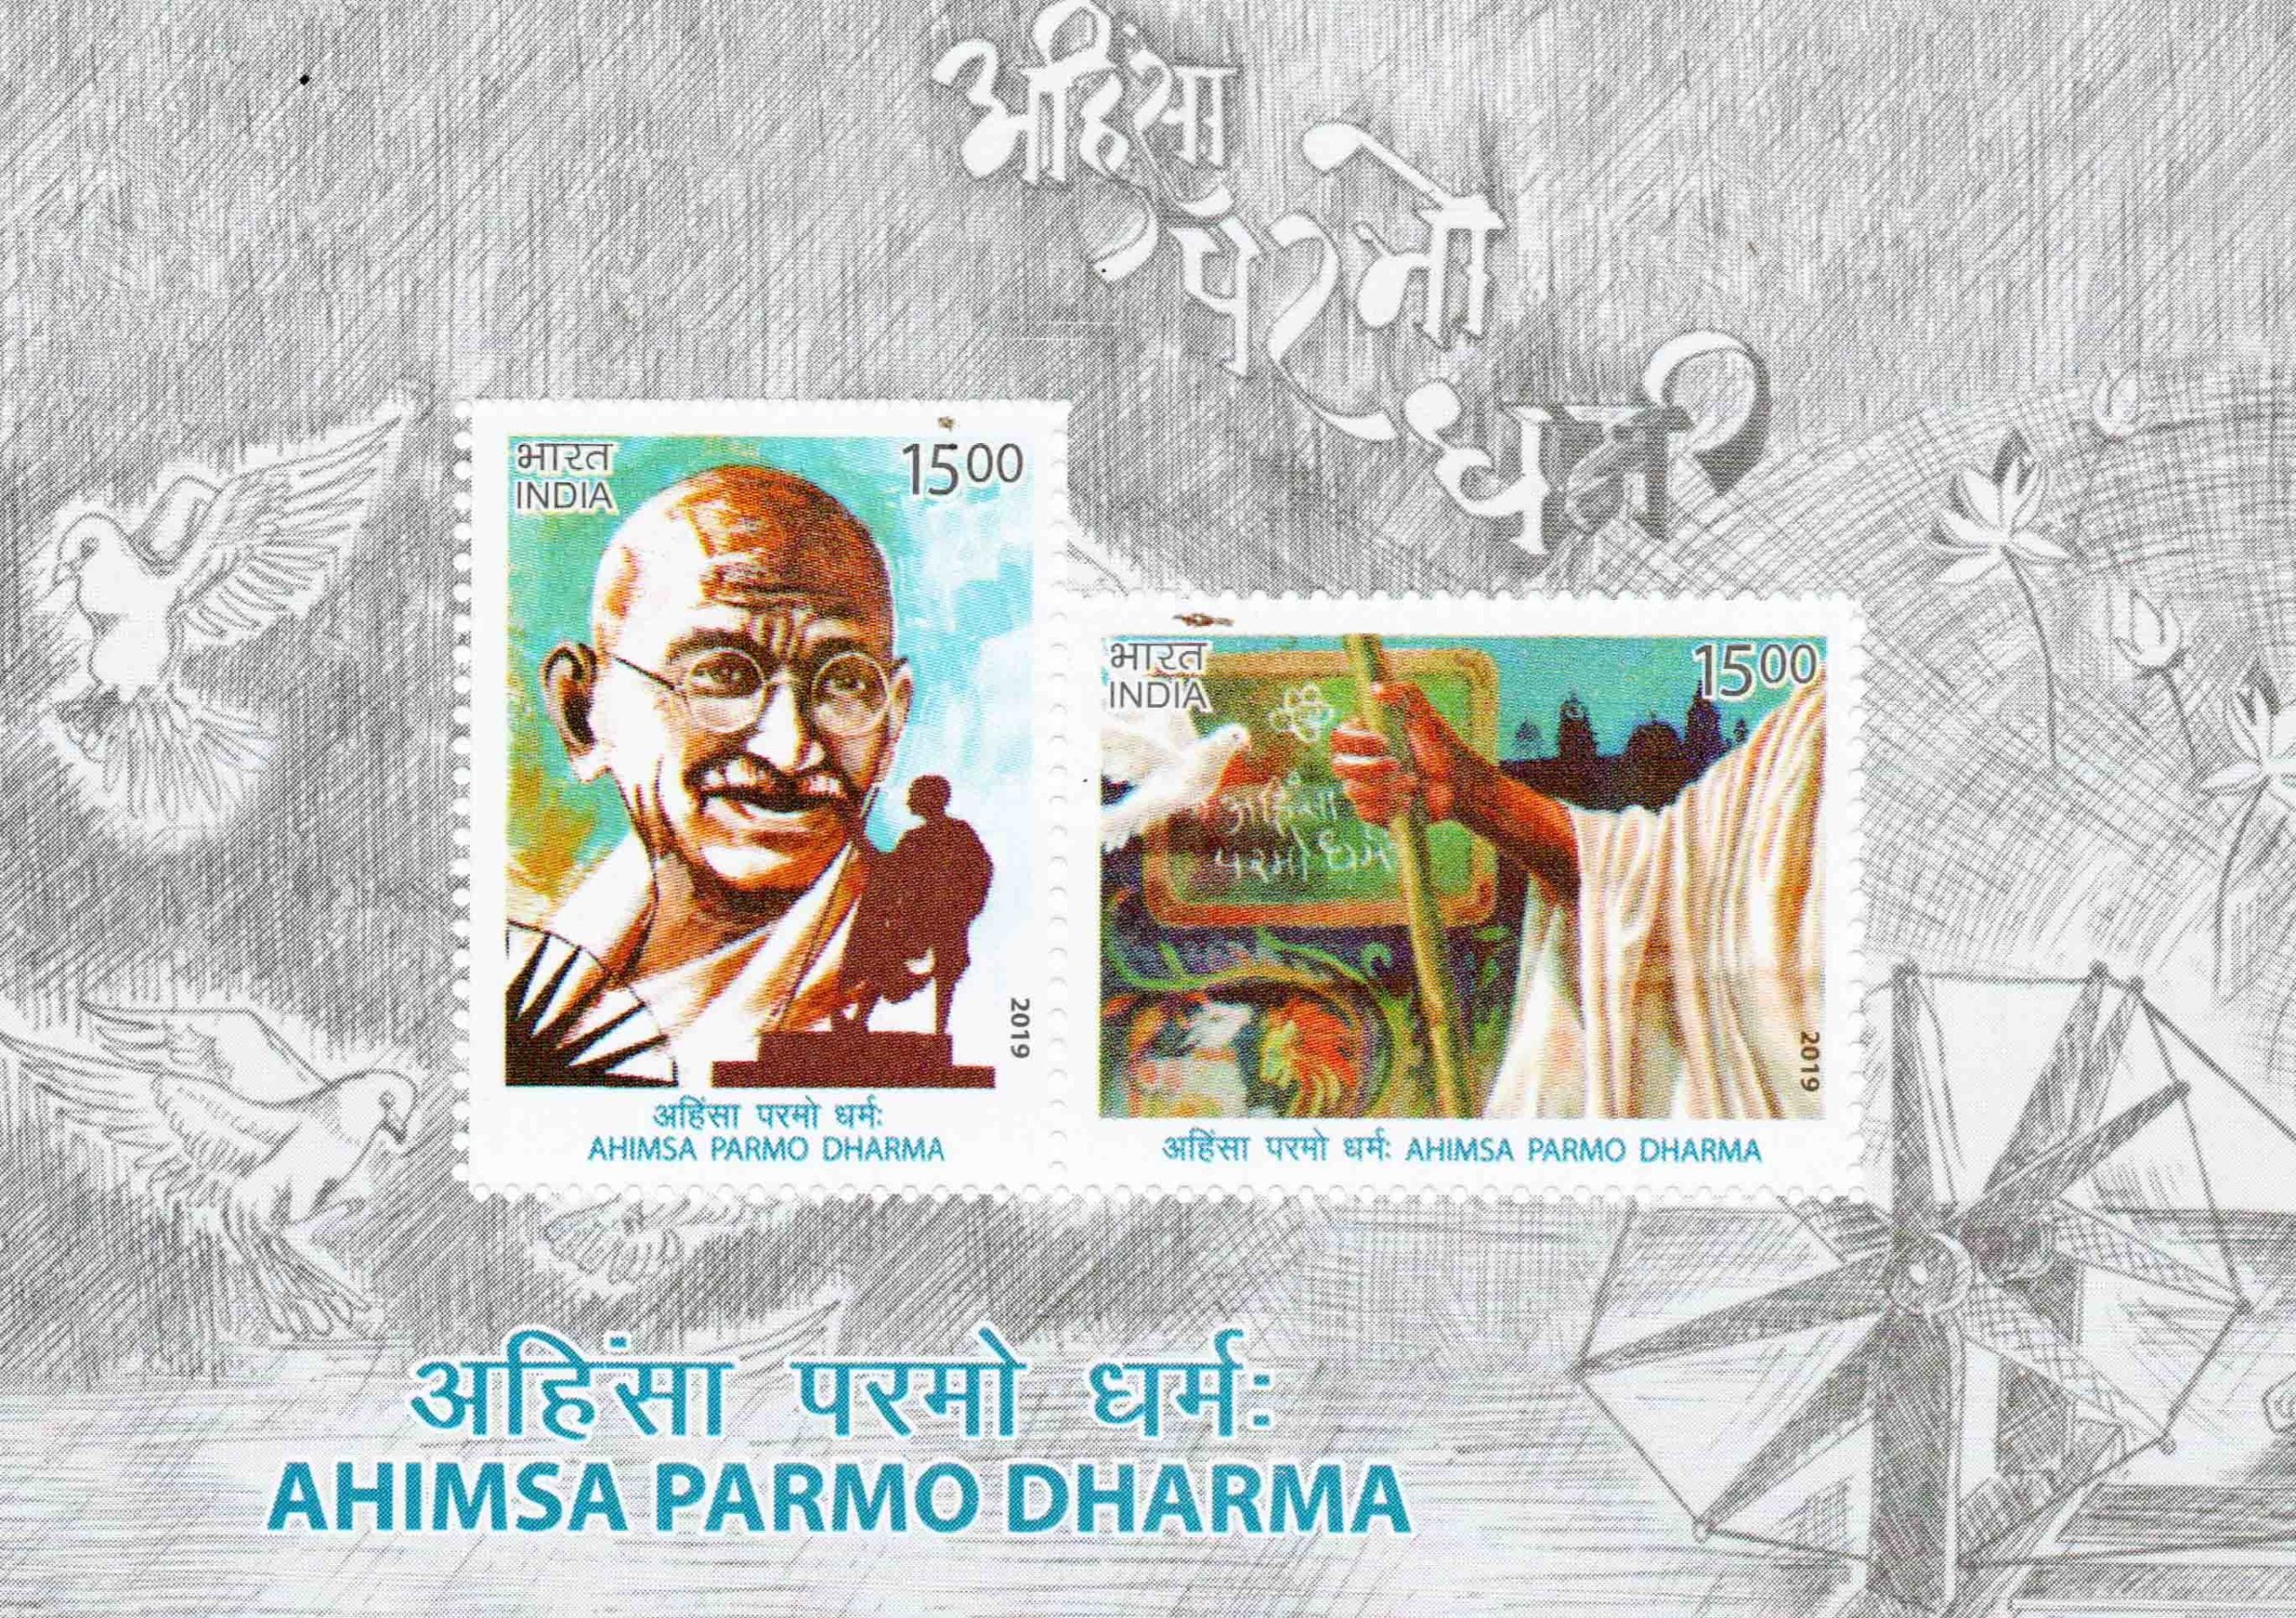 Ahinsa Parmo Dharma added a new photo. - Ahinsa Parmo Dharma